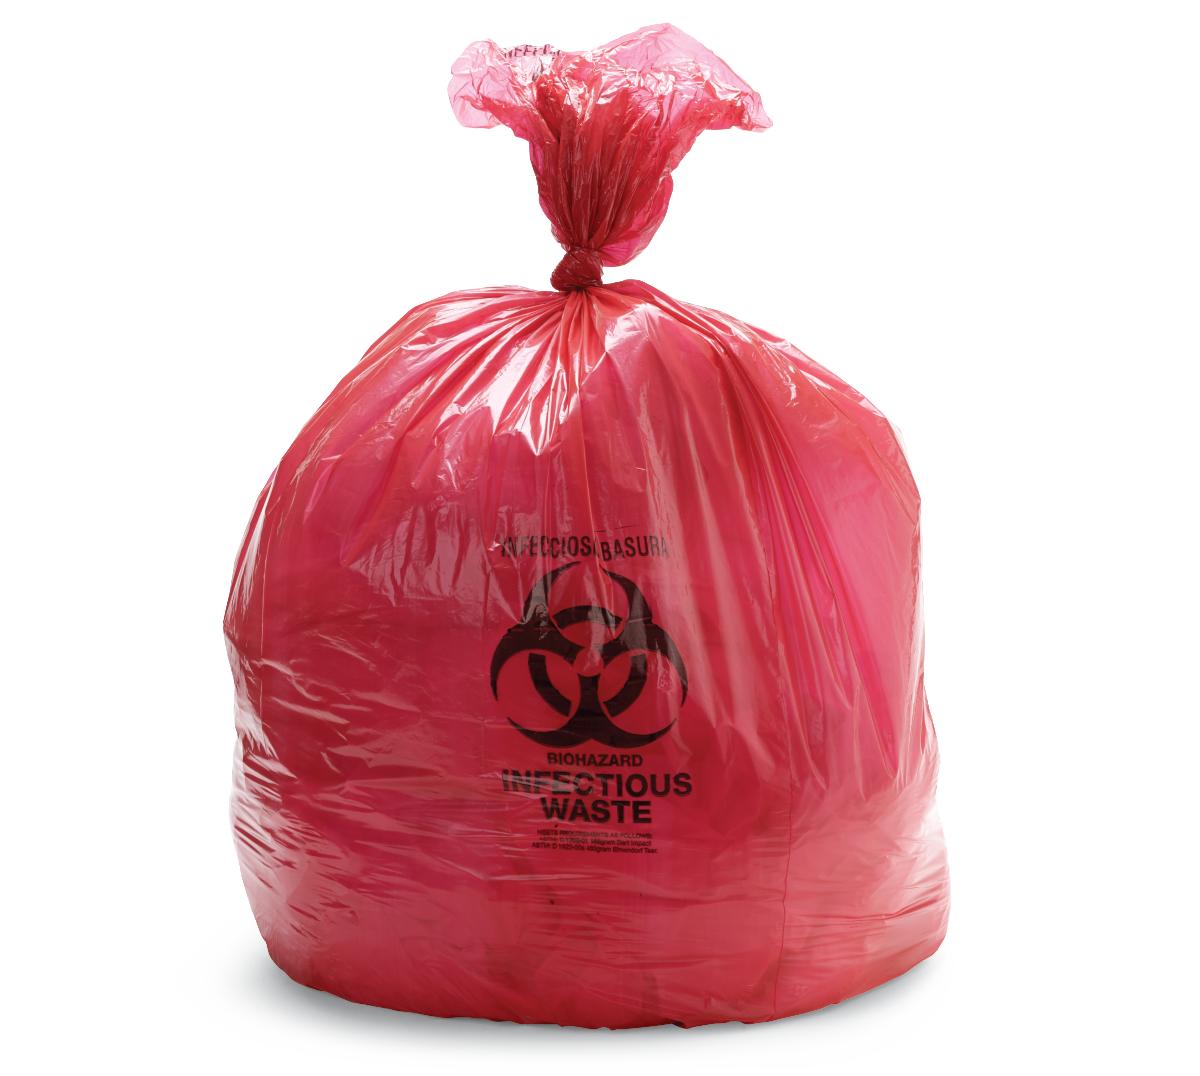 500 Each-Case / Red / Polyethylene Housekeeping - MEDLINE - Wasatch Medical Supply